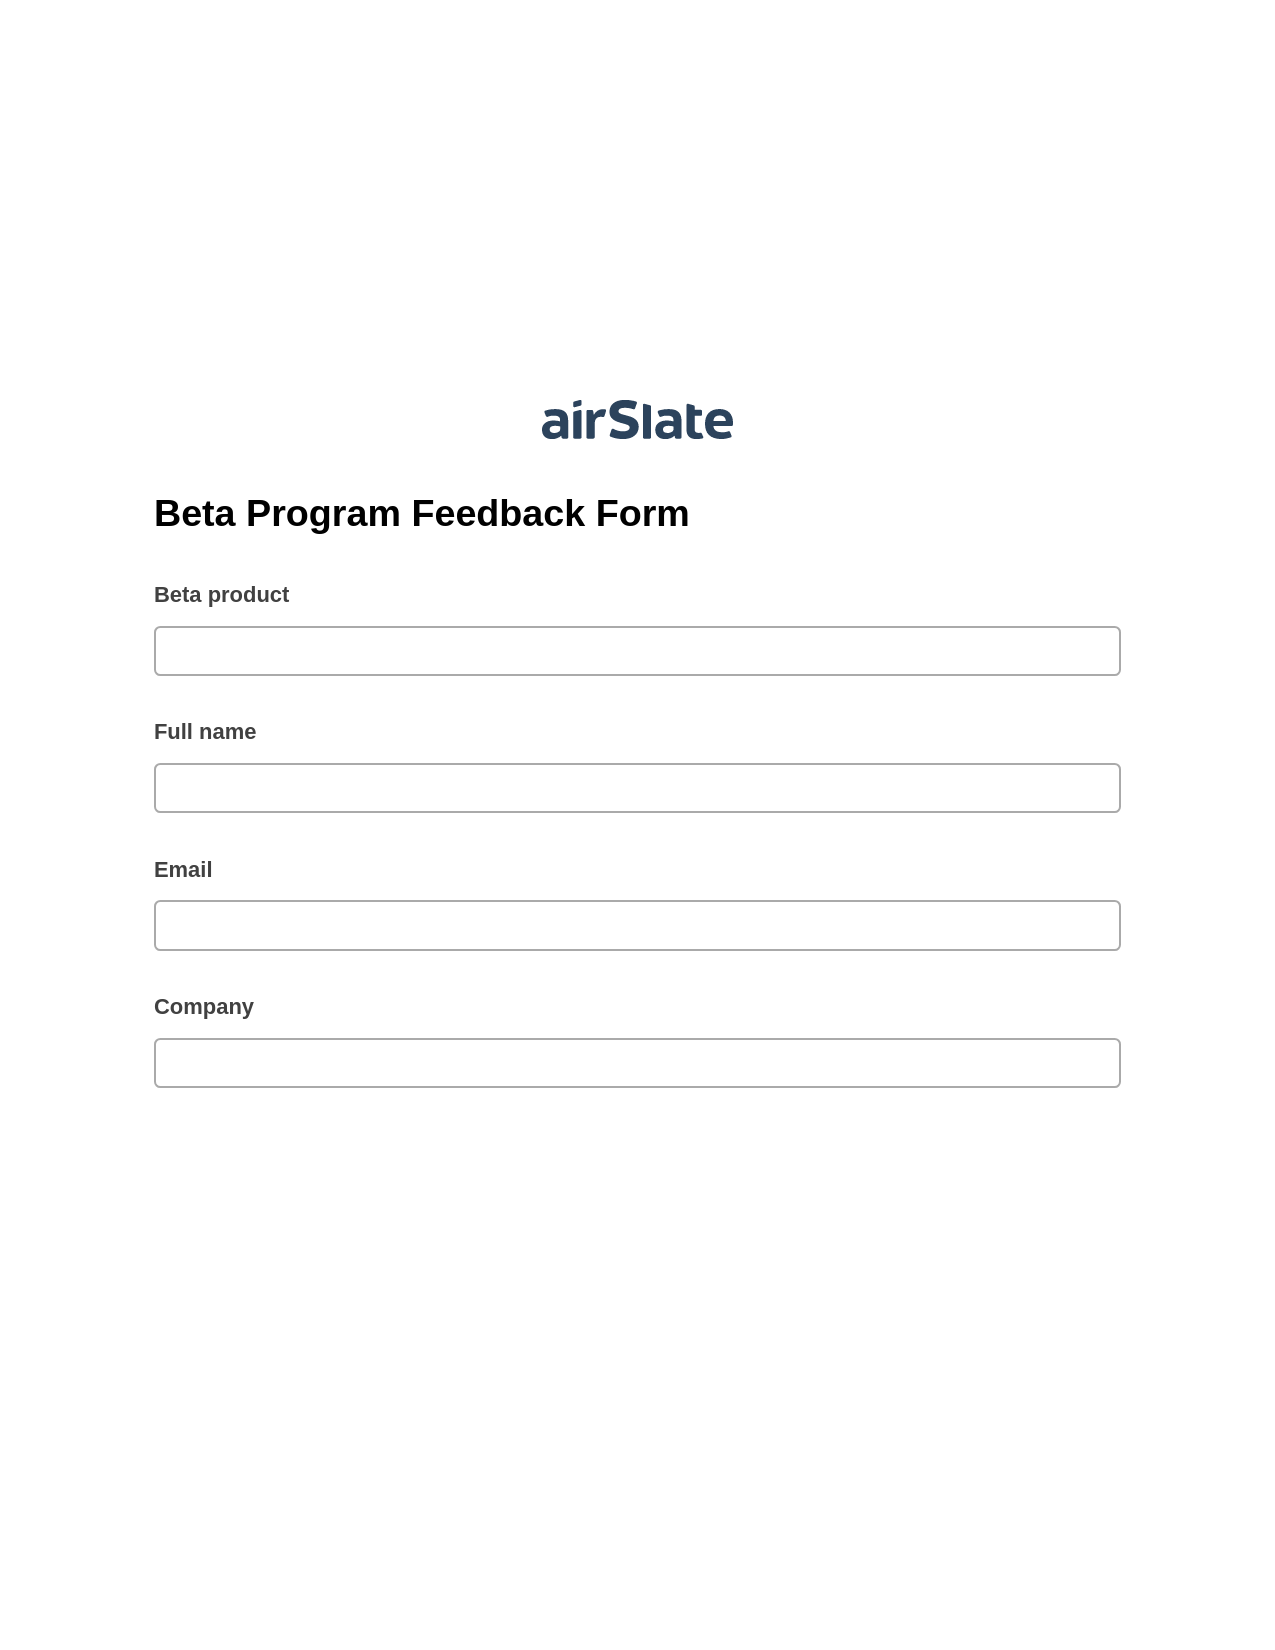 Beta Program Feedback Form Pre-fill Dropdowns from CSV File Bot, Reminder Bot, Export to Smartsheet